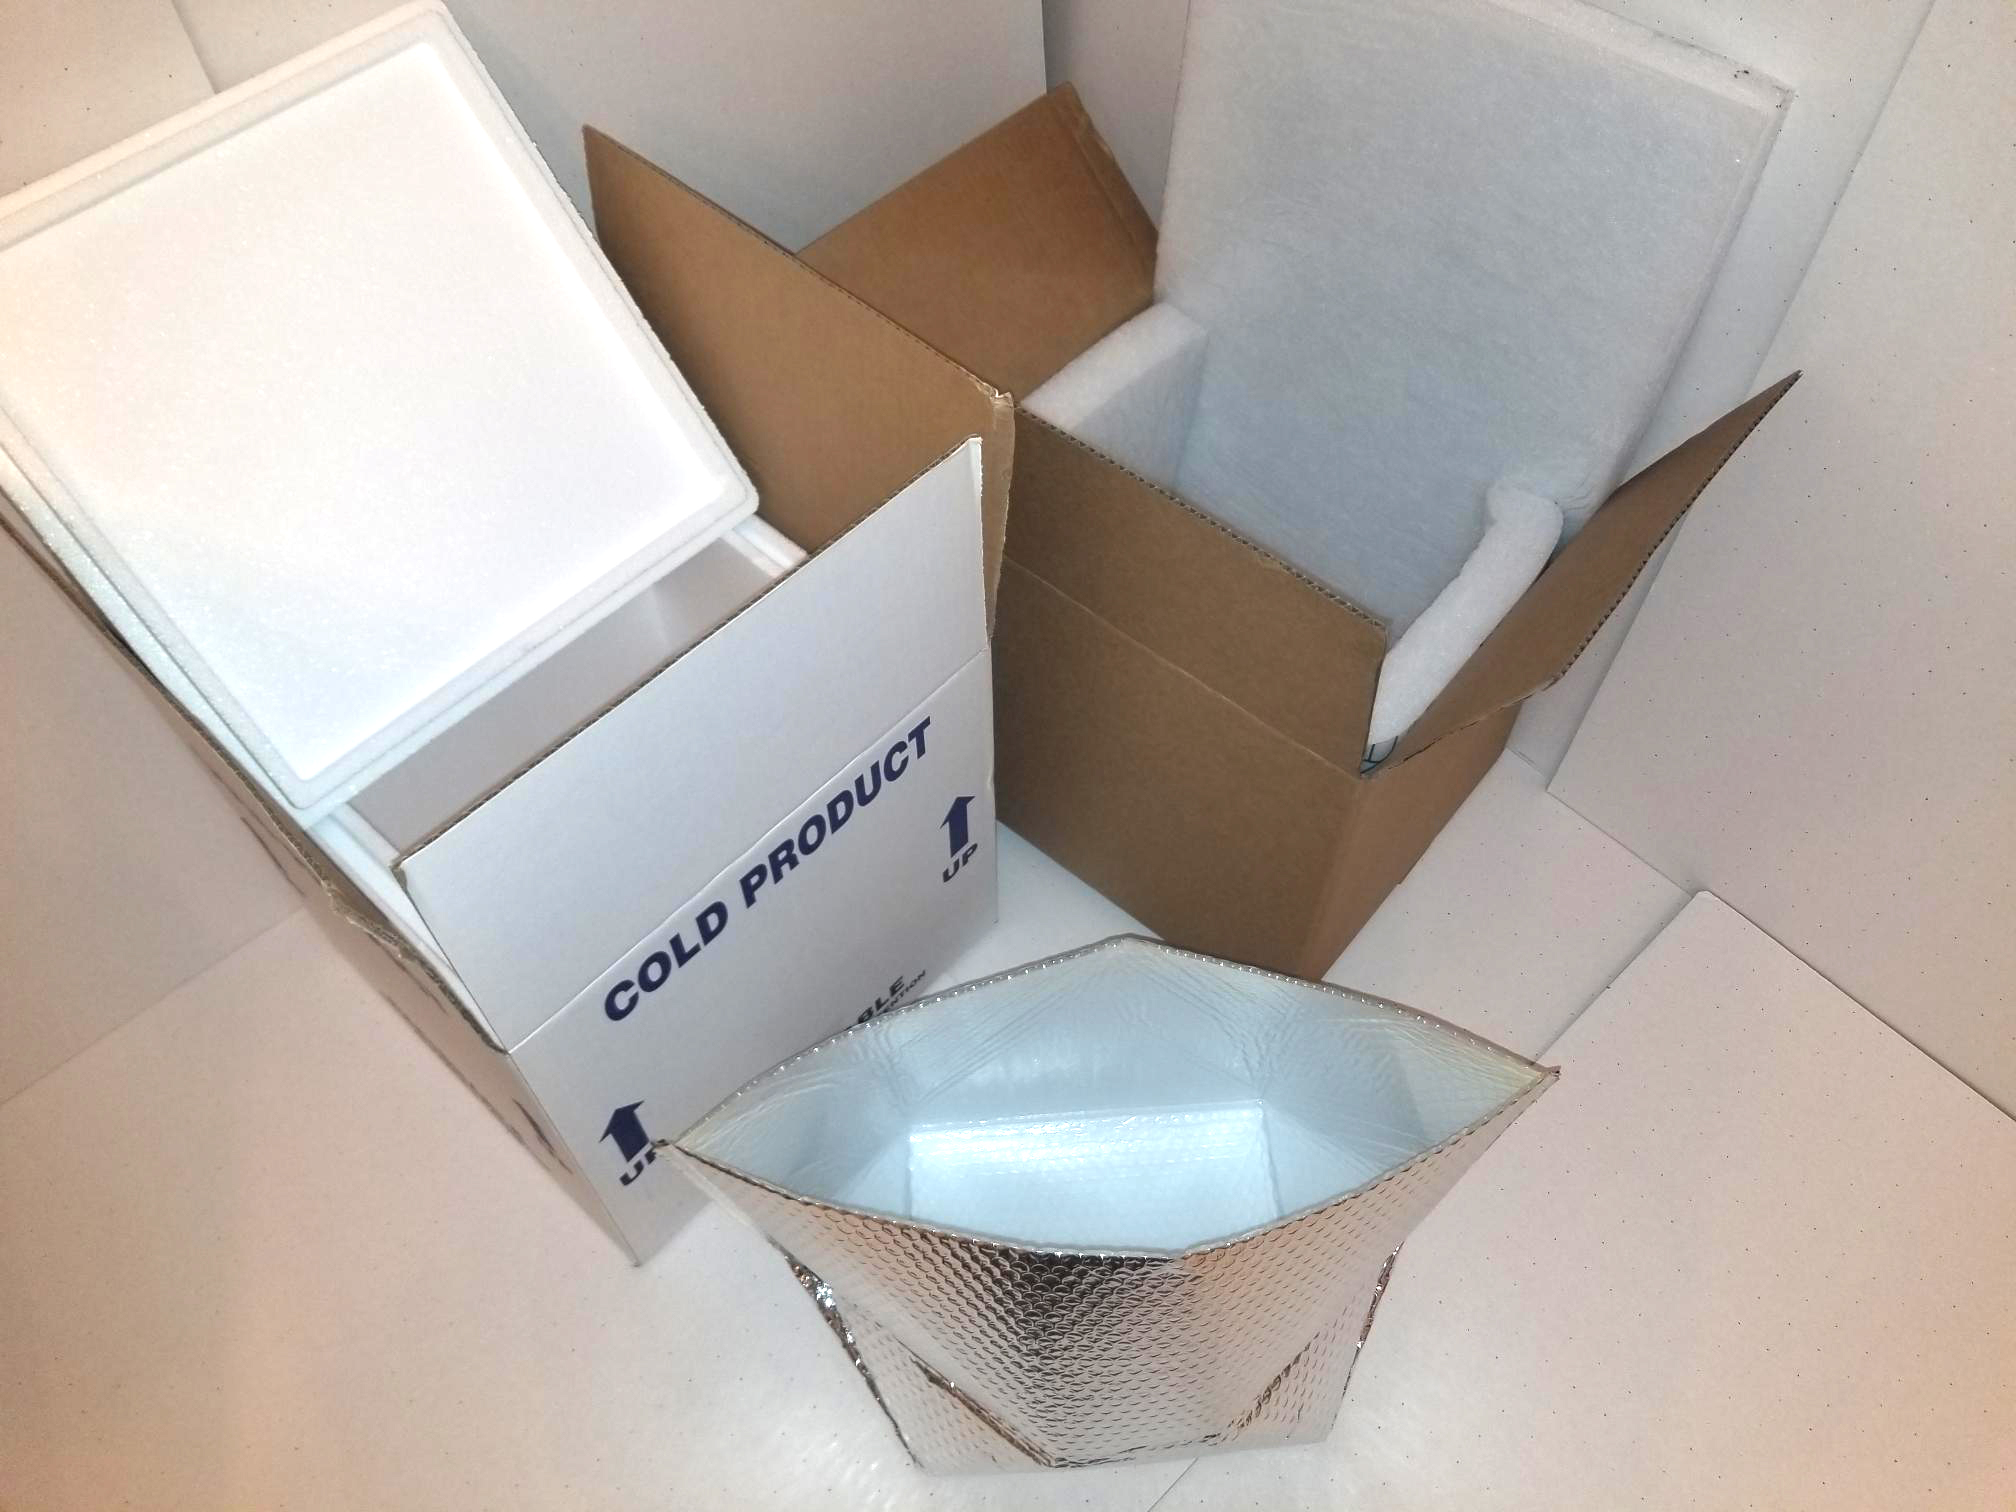 Stamar Packaging insulated packaging